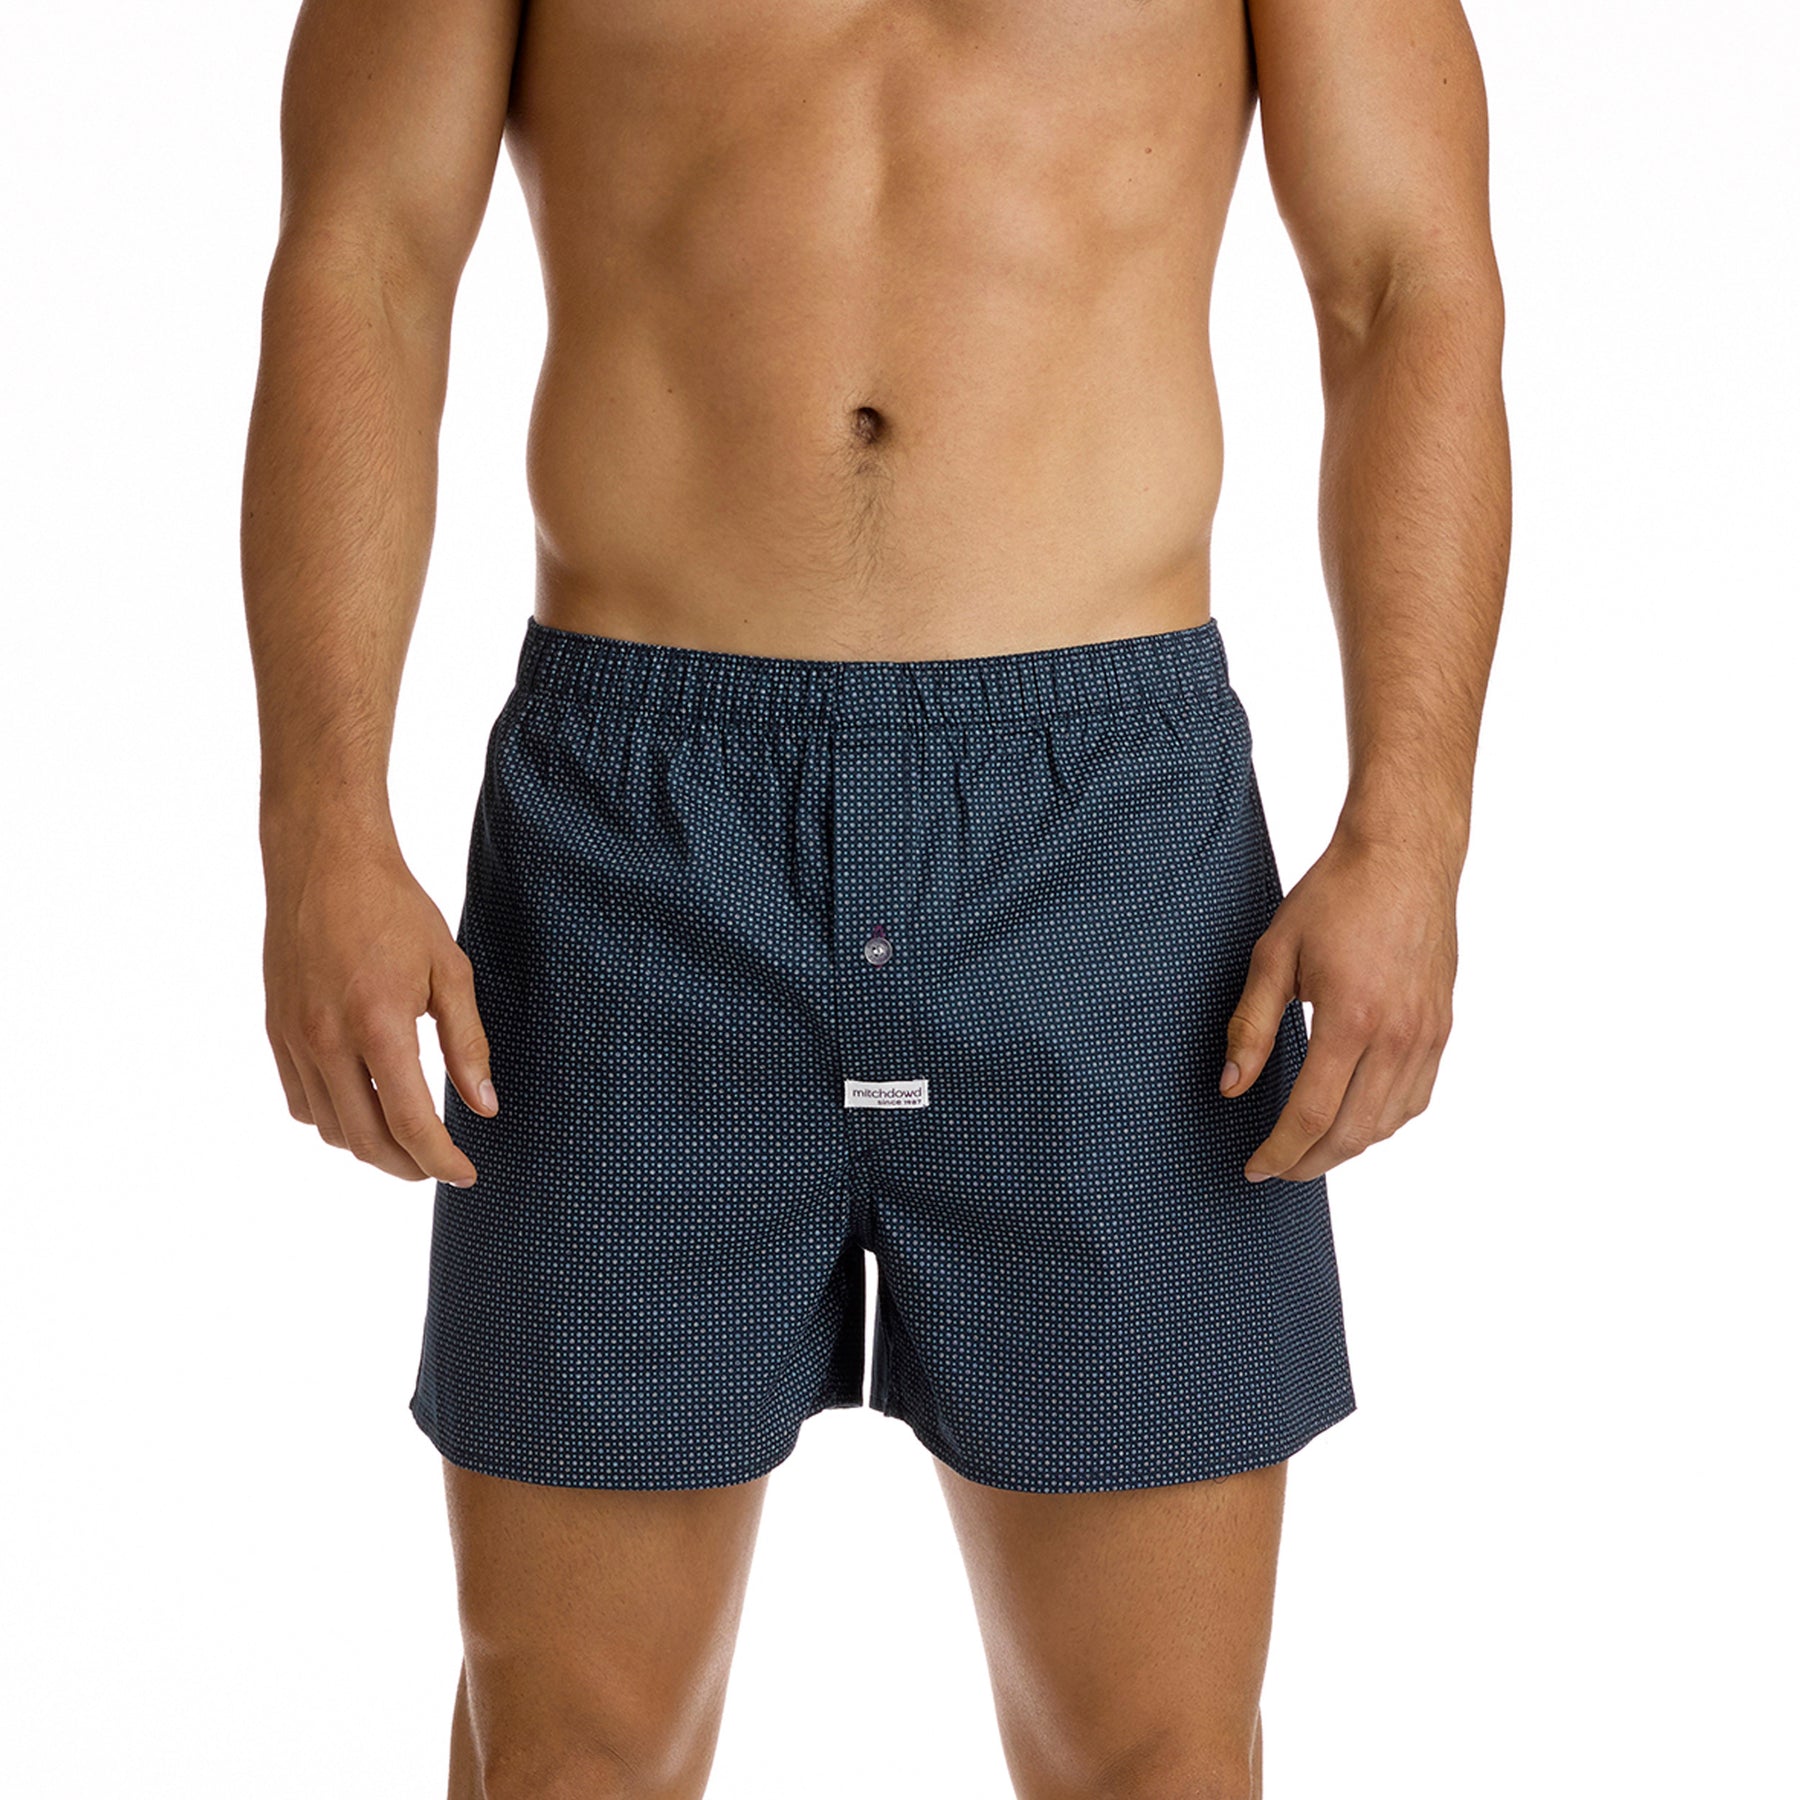 Buy Men's Boxer Shorts Online Australia - Mitch Dowd